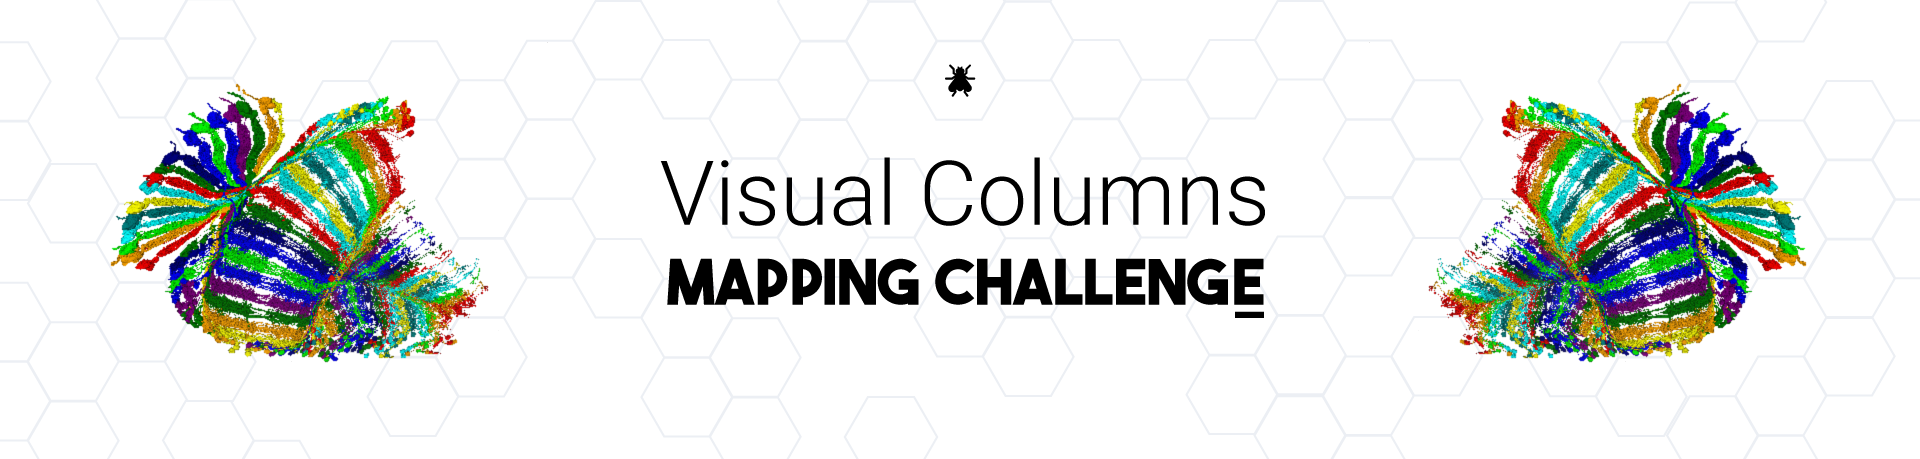 Visual Columns Mapping Challenge